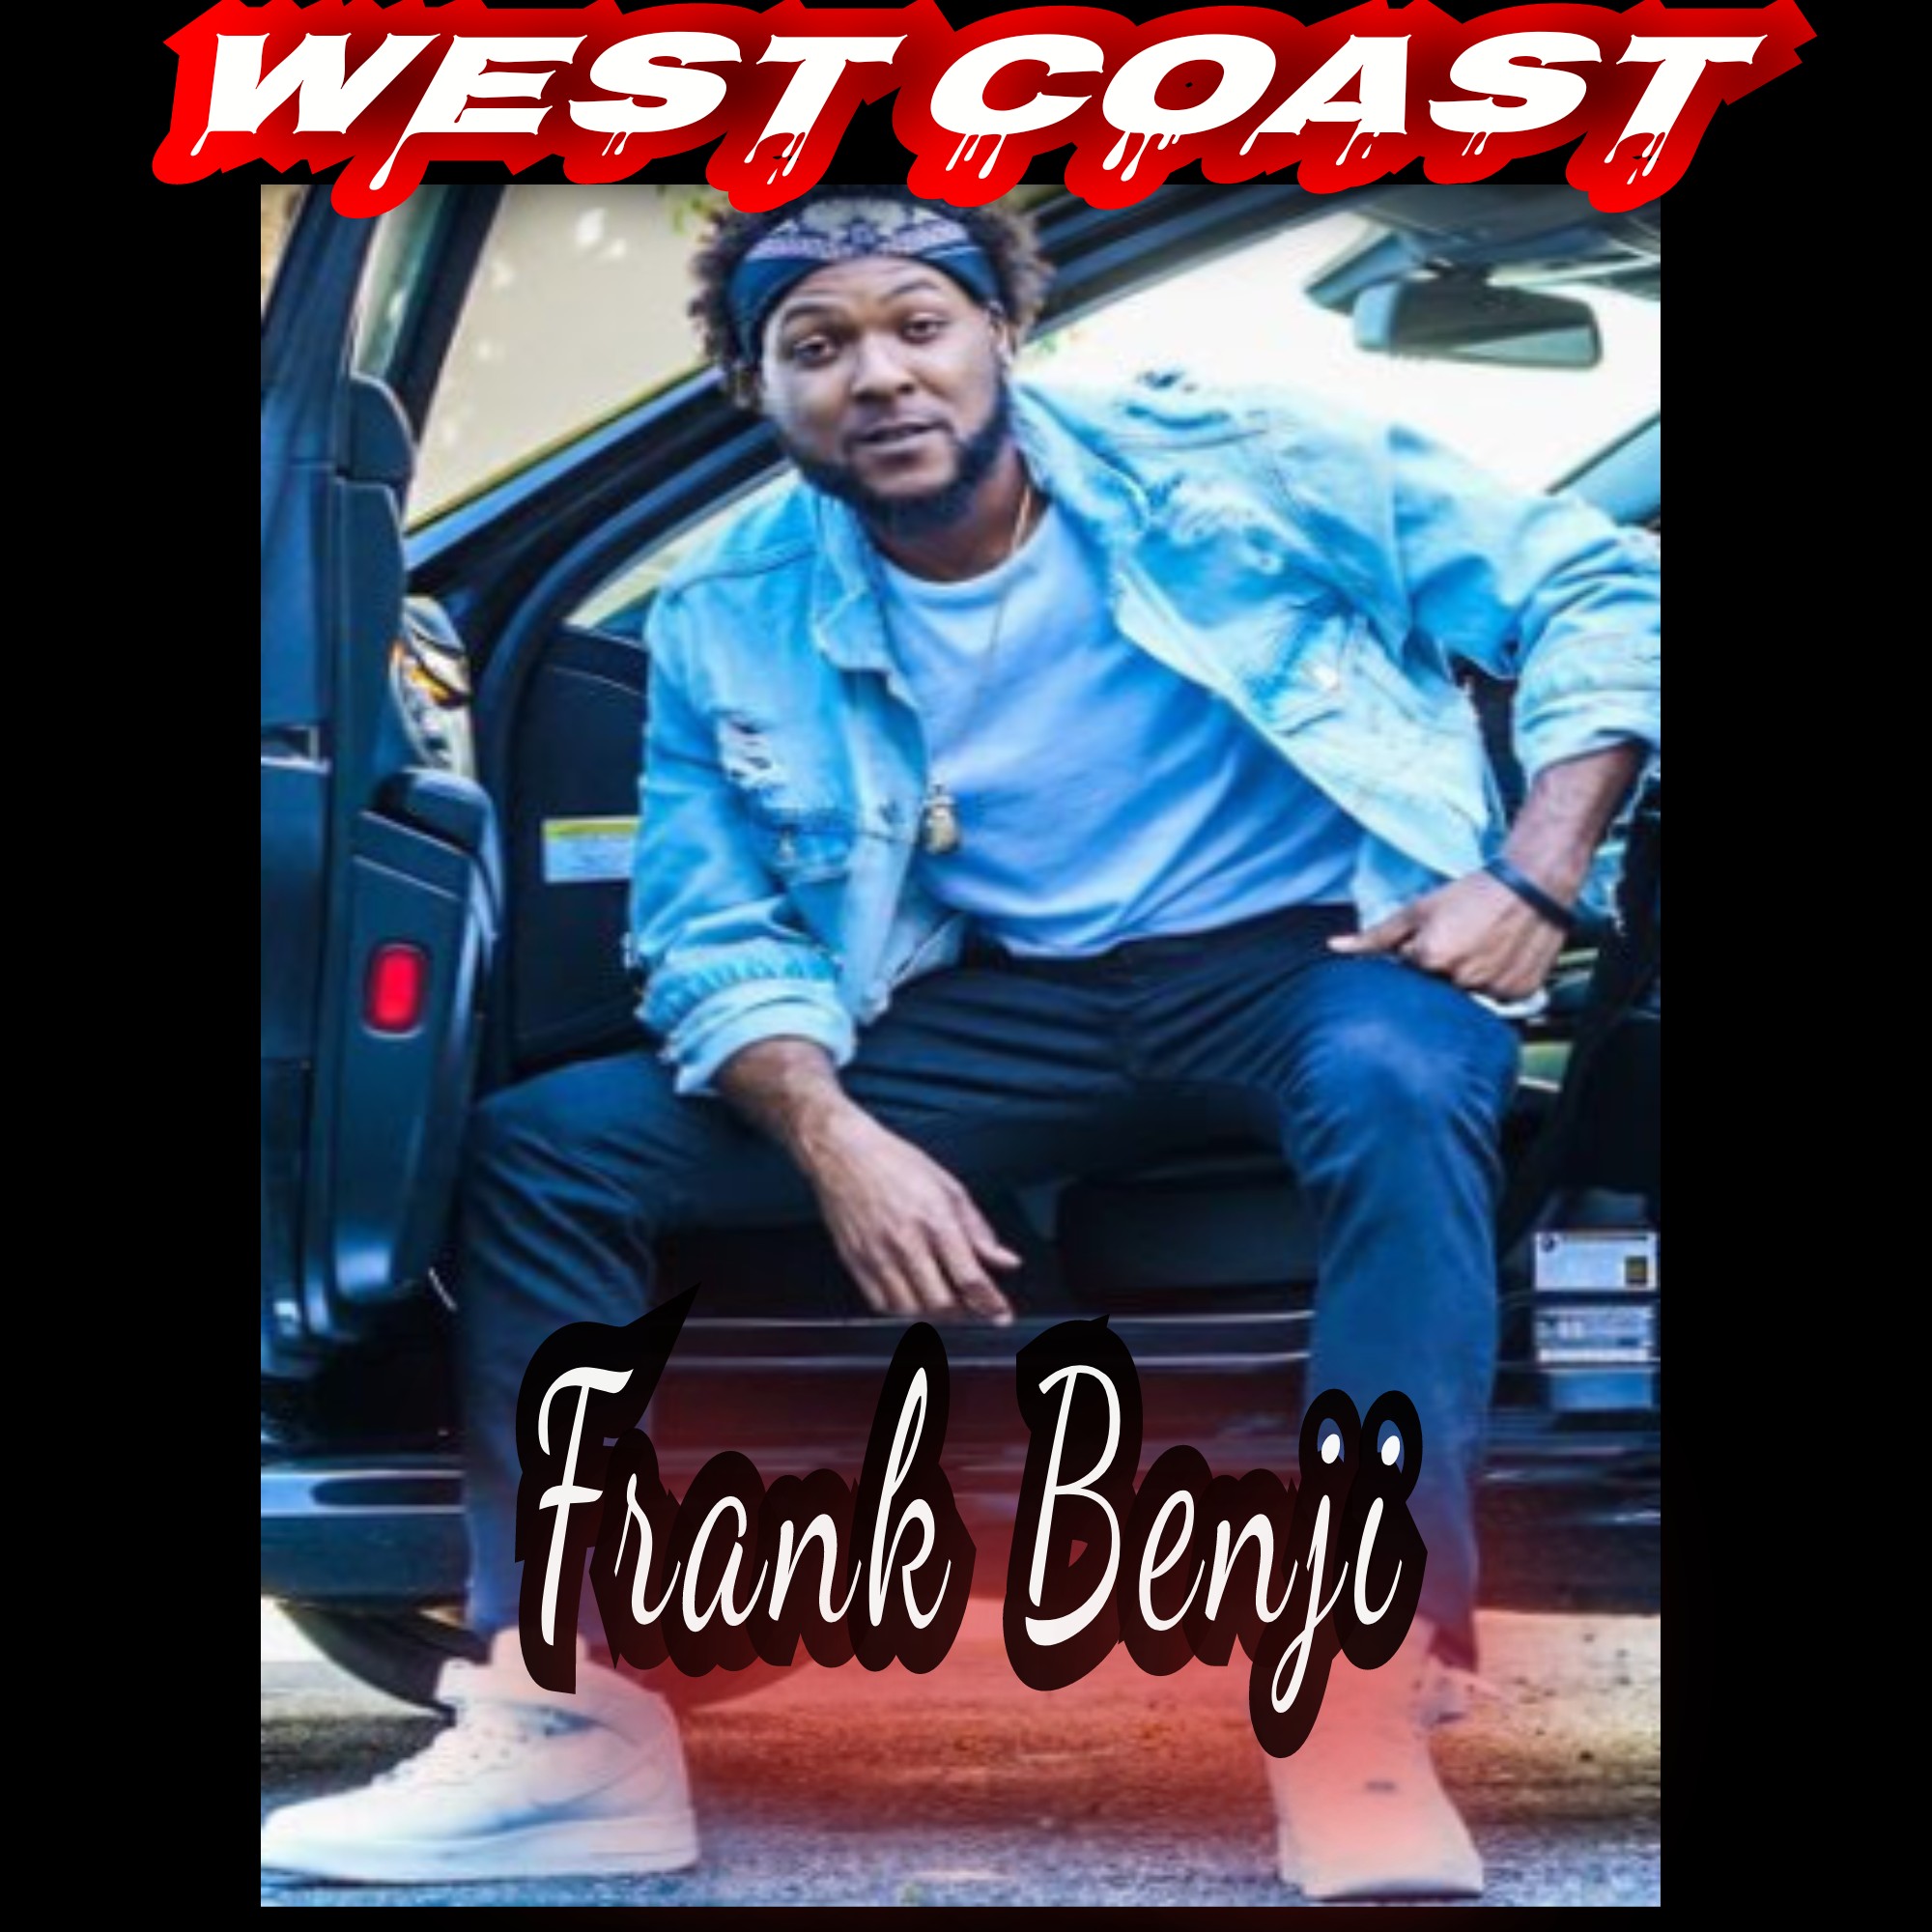 New Music! Frank Benji “West Coast” @scmusicgroup